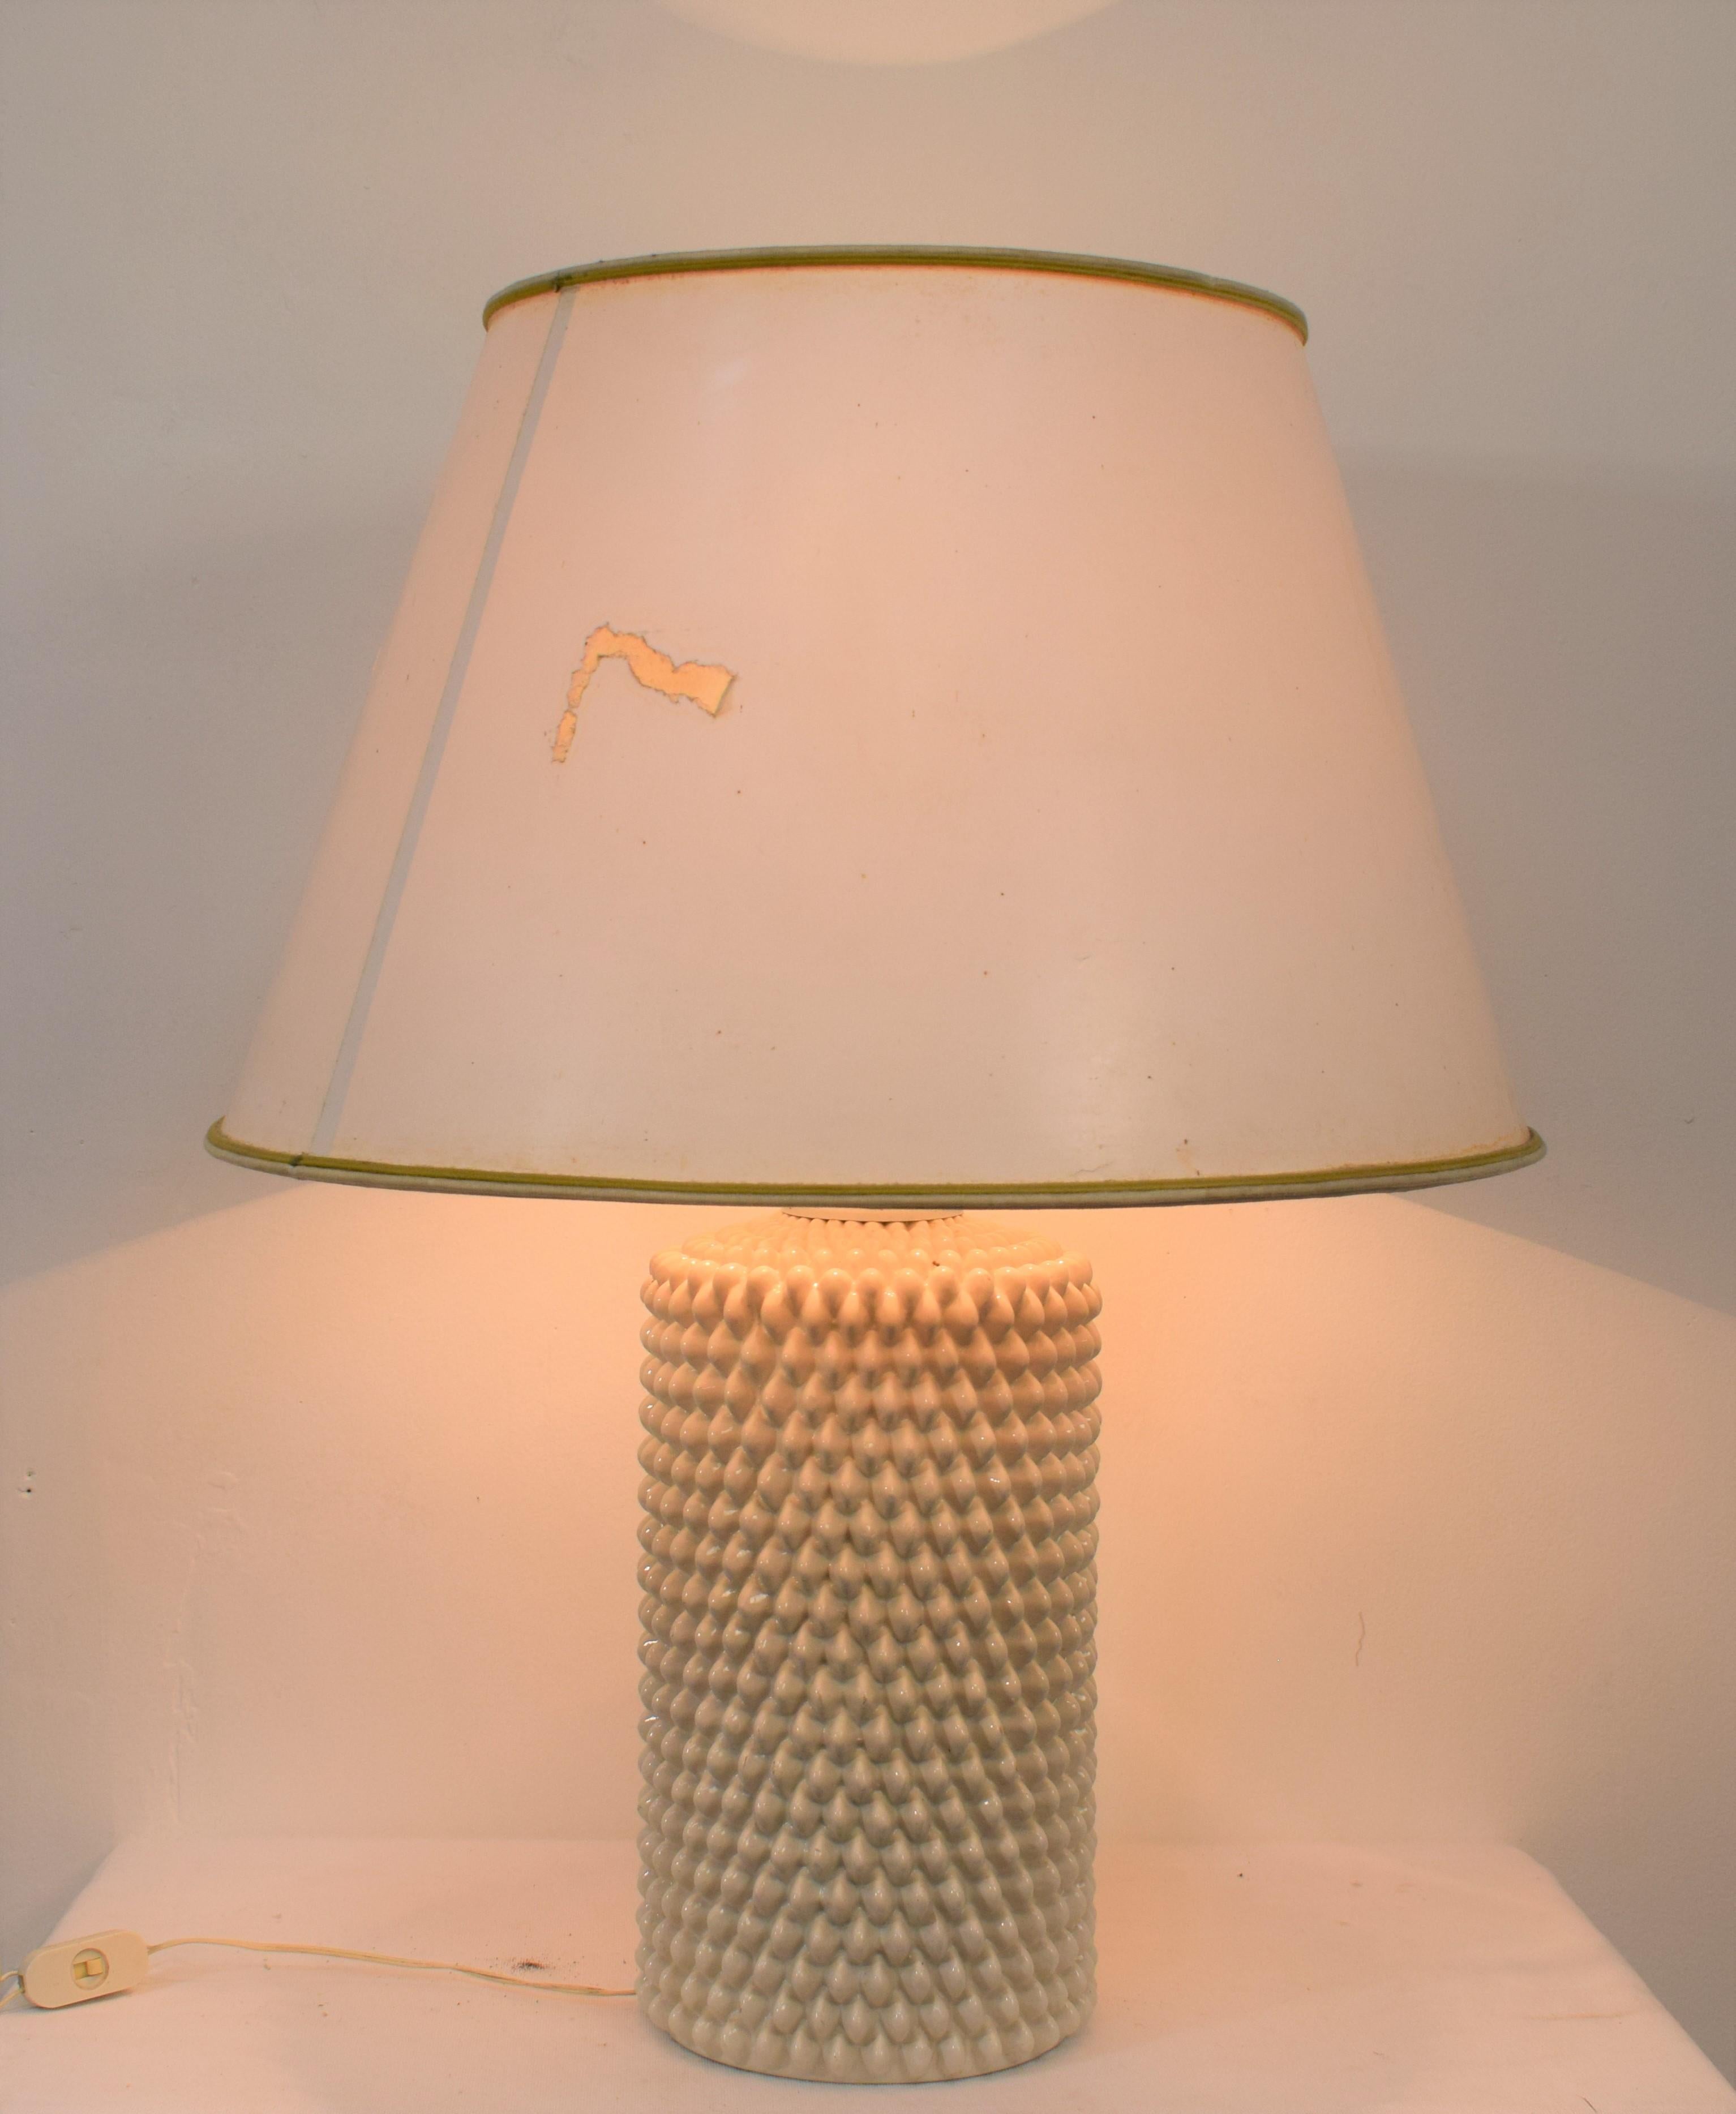 Italian ceramic table lamp, 1960s.
Dimensions: H= 70 cm; D=55 cm; H lamp only= 45 cm.